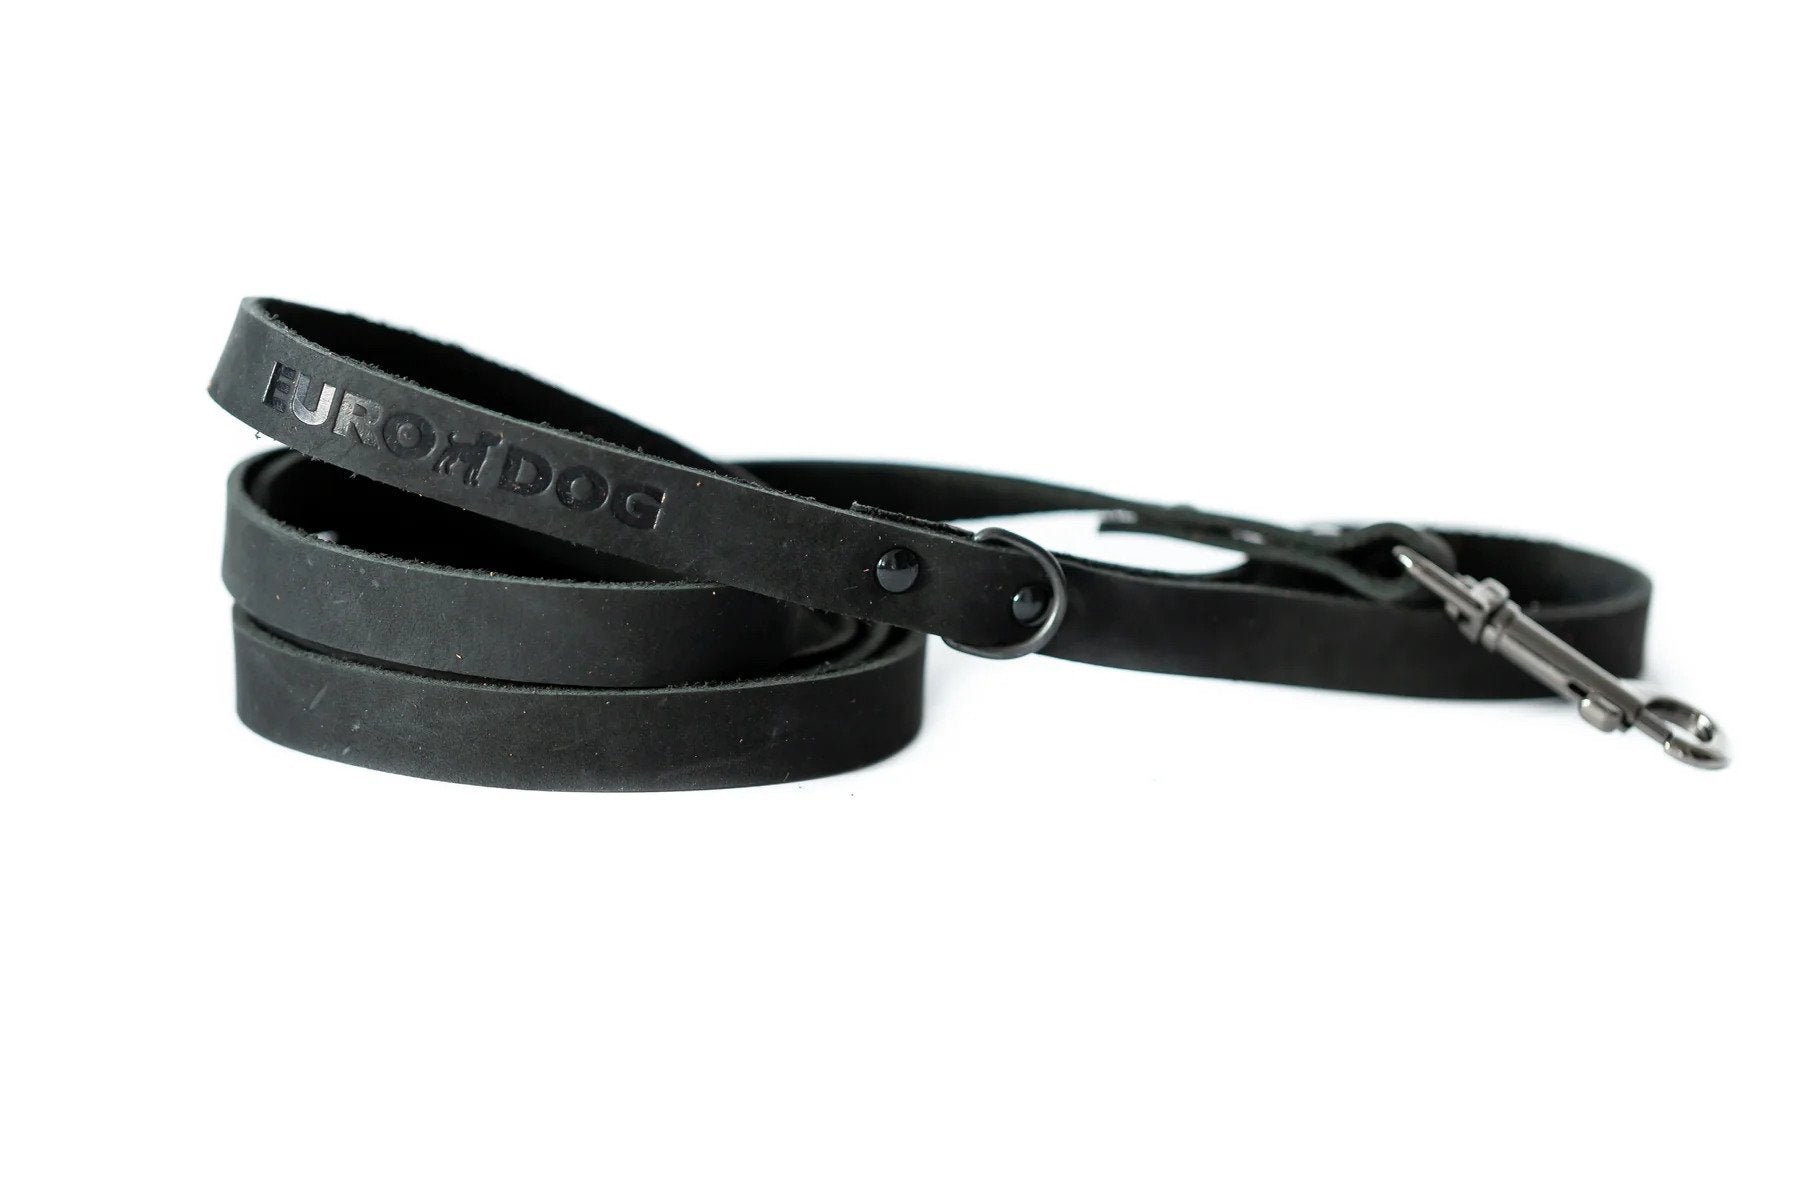 Eurodog Collars Soft Leather Sport Style Dog Leash Black Very Soft Leather